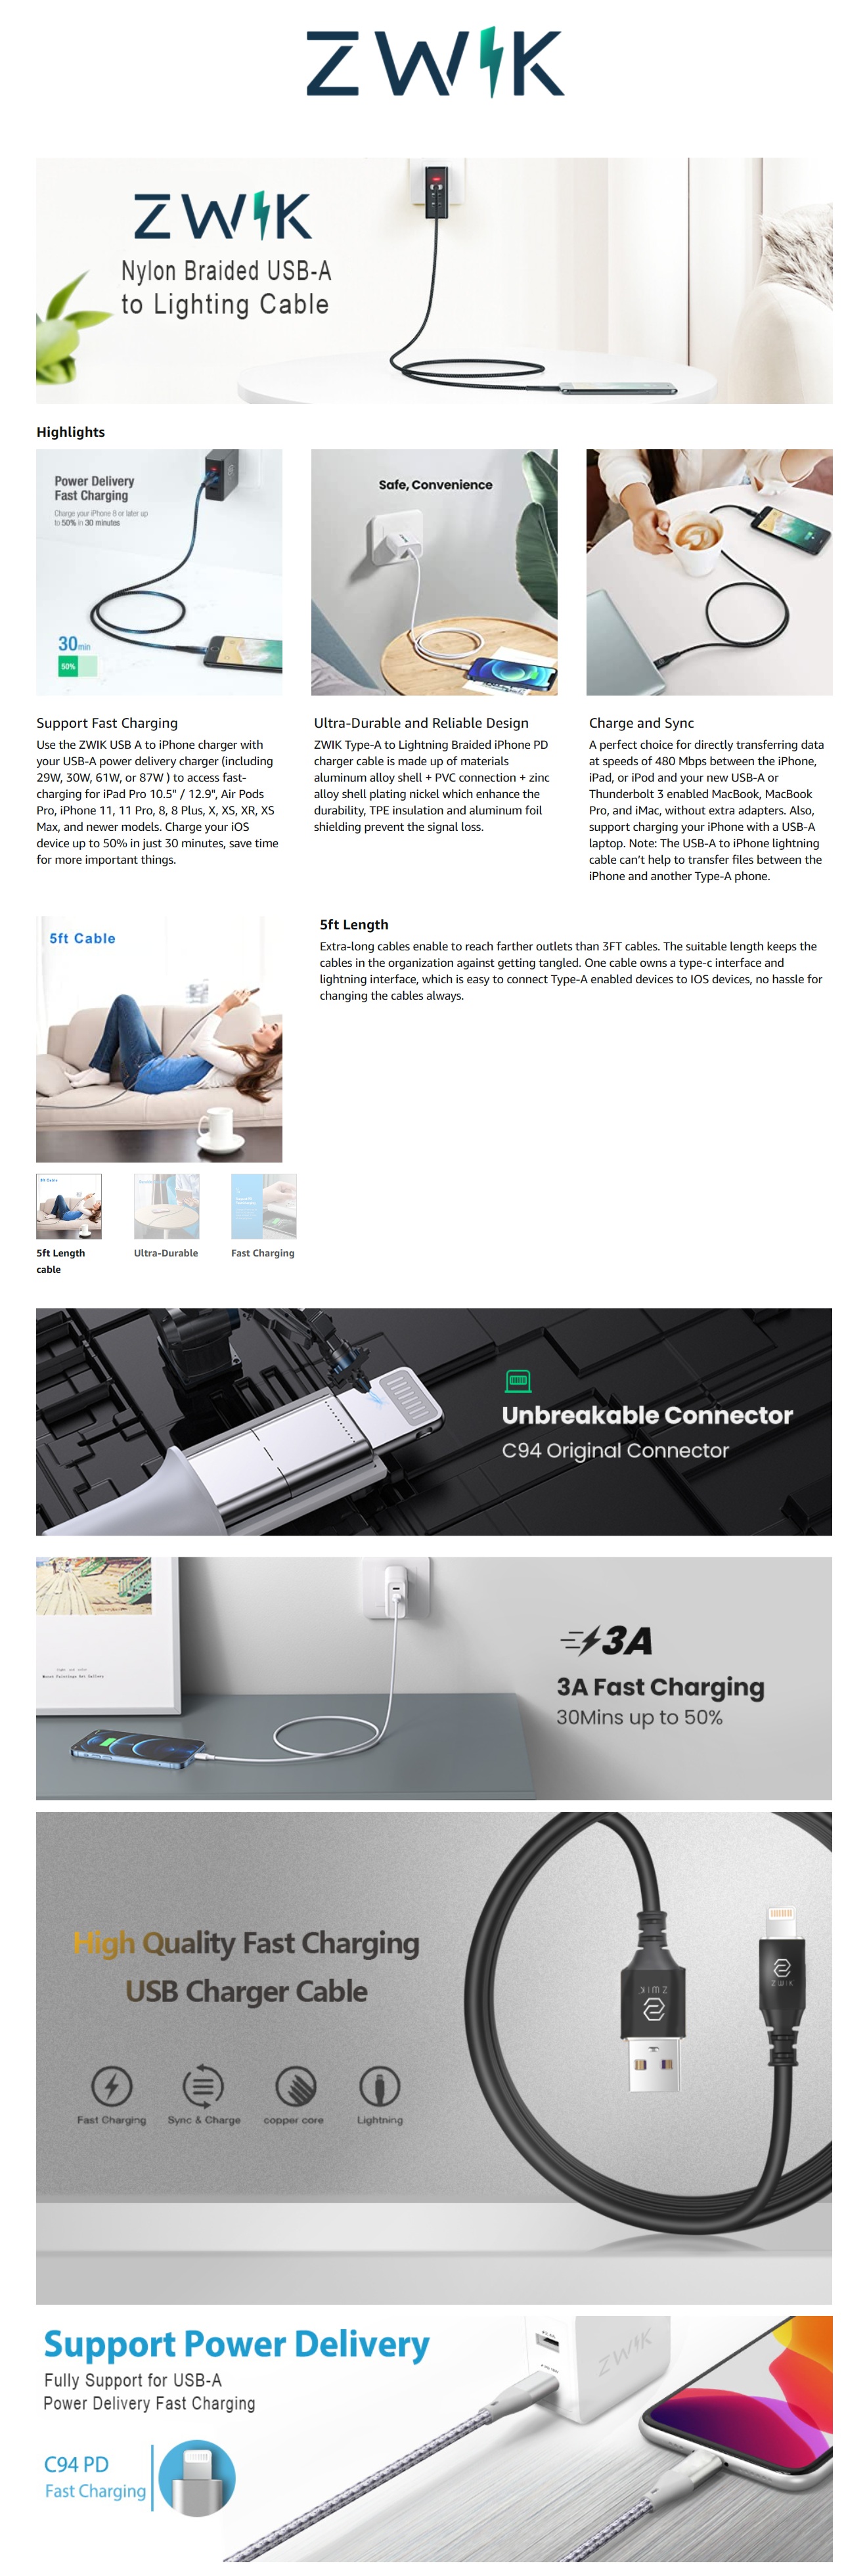 amazon product graphic design service ecommerce product image design creative design service for amazon